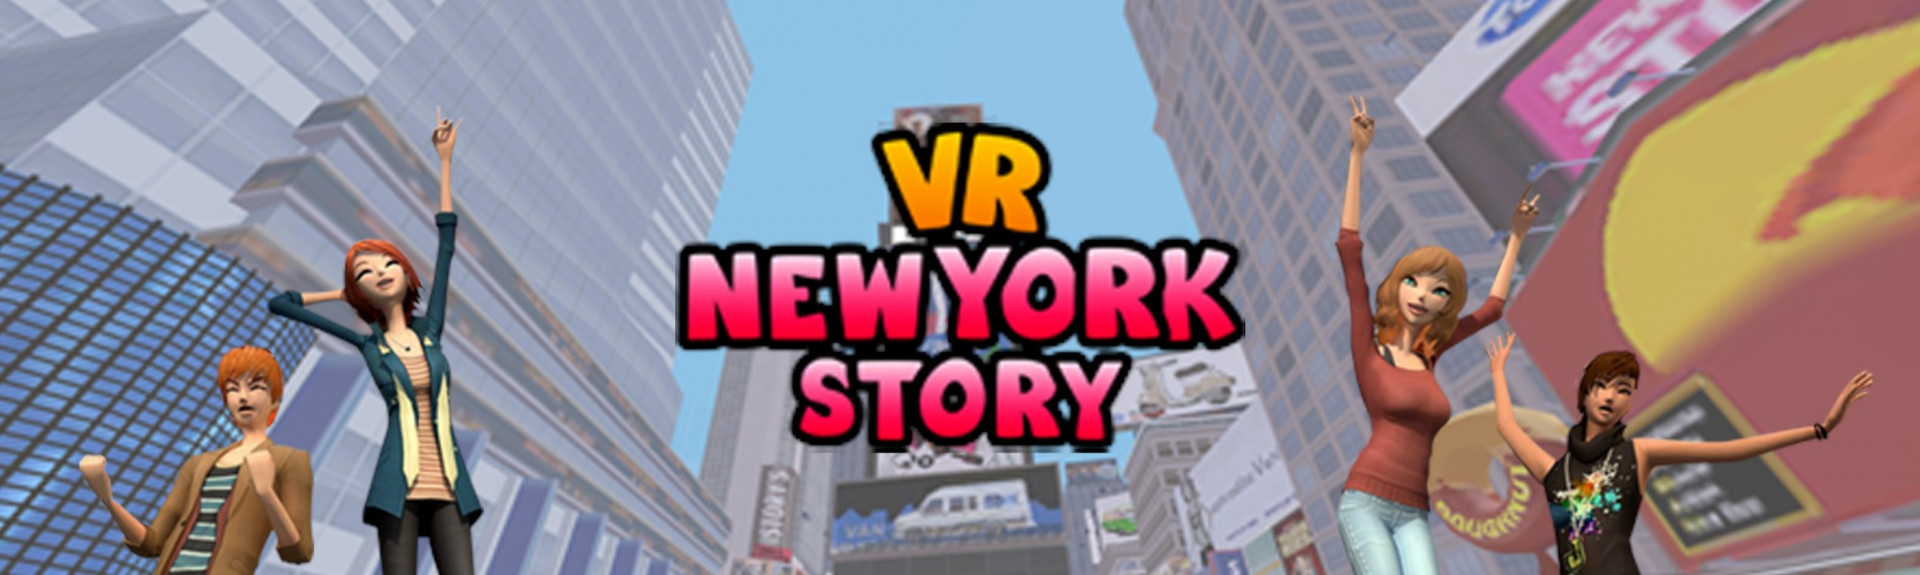 VR New York Story